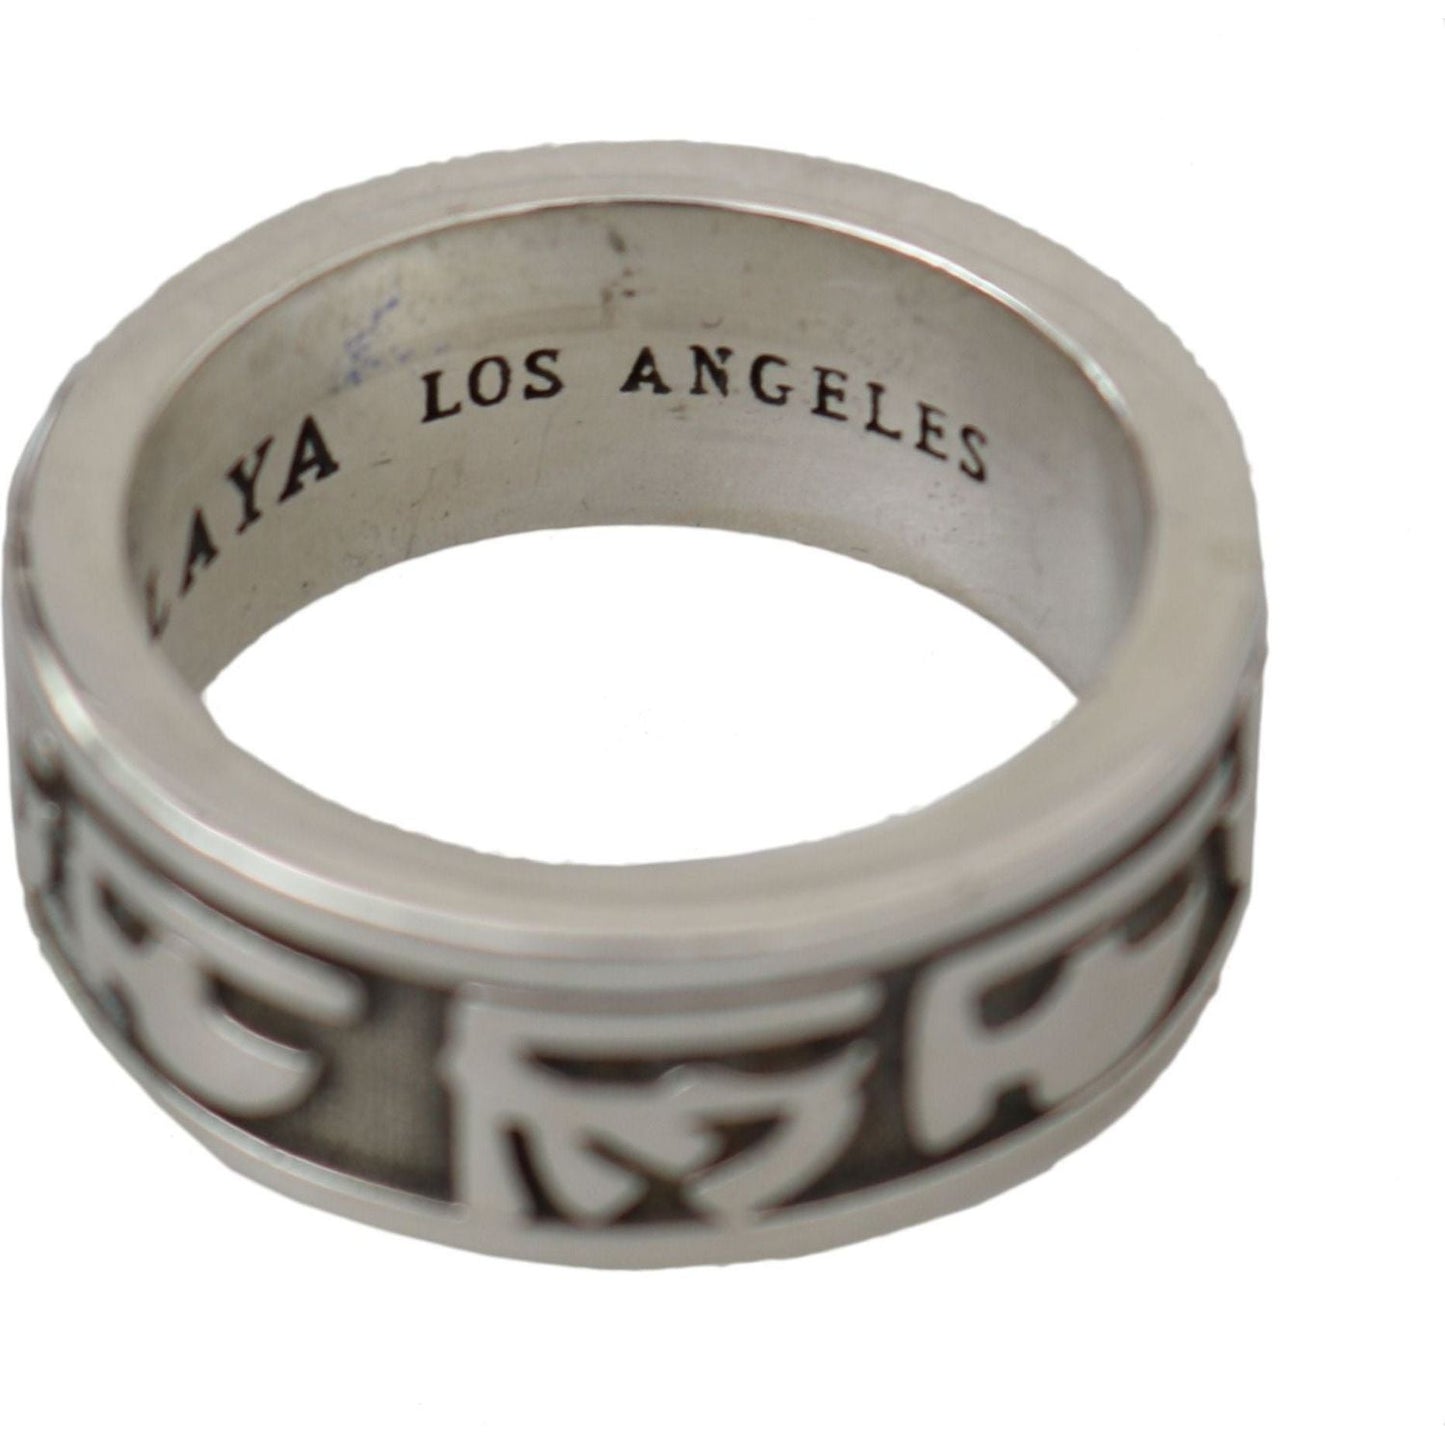 Nialaya Elegant Silver Sterling Men's Ring Ring silver-sterling-hieroglyph-men-925-authentic